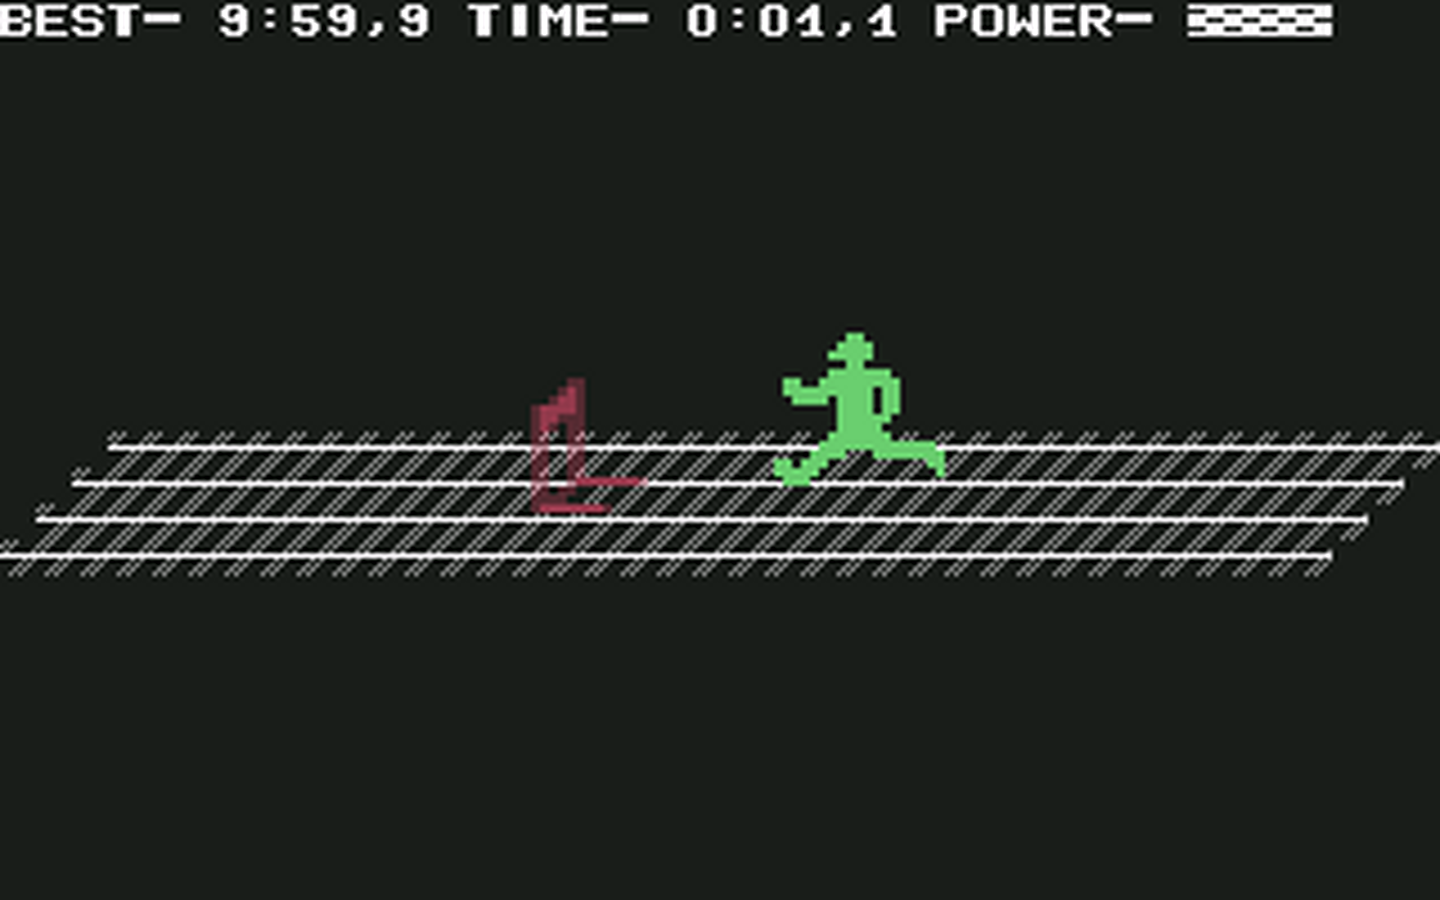 C64 GameBase Step_on_Step ABC_Soft 1984